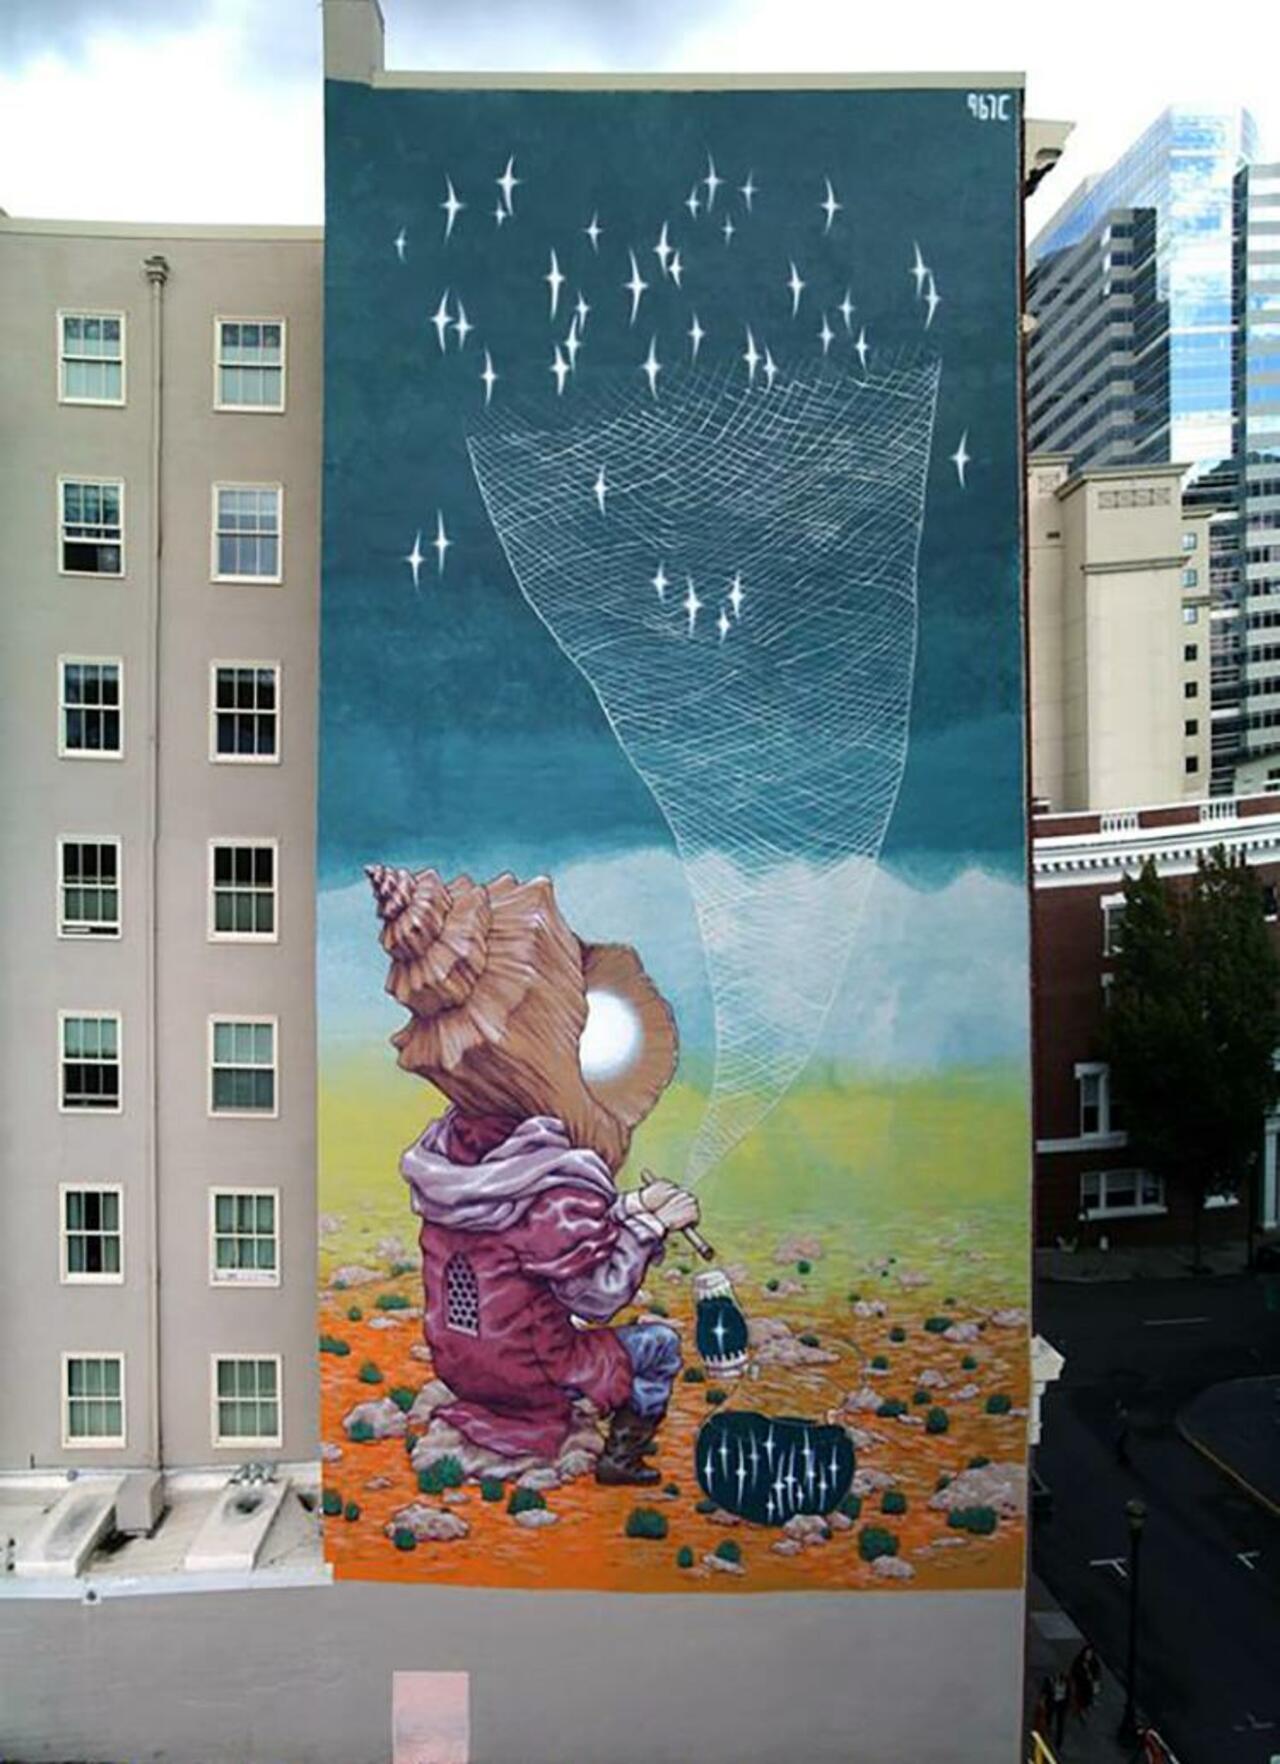 Rustam Qbic unveils a new mural in Portland, Oregon. #StreetArt #Graffiti #Mural http://t.co/2IF9PrufCa